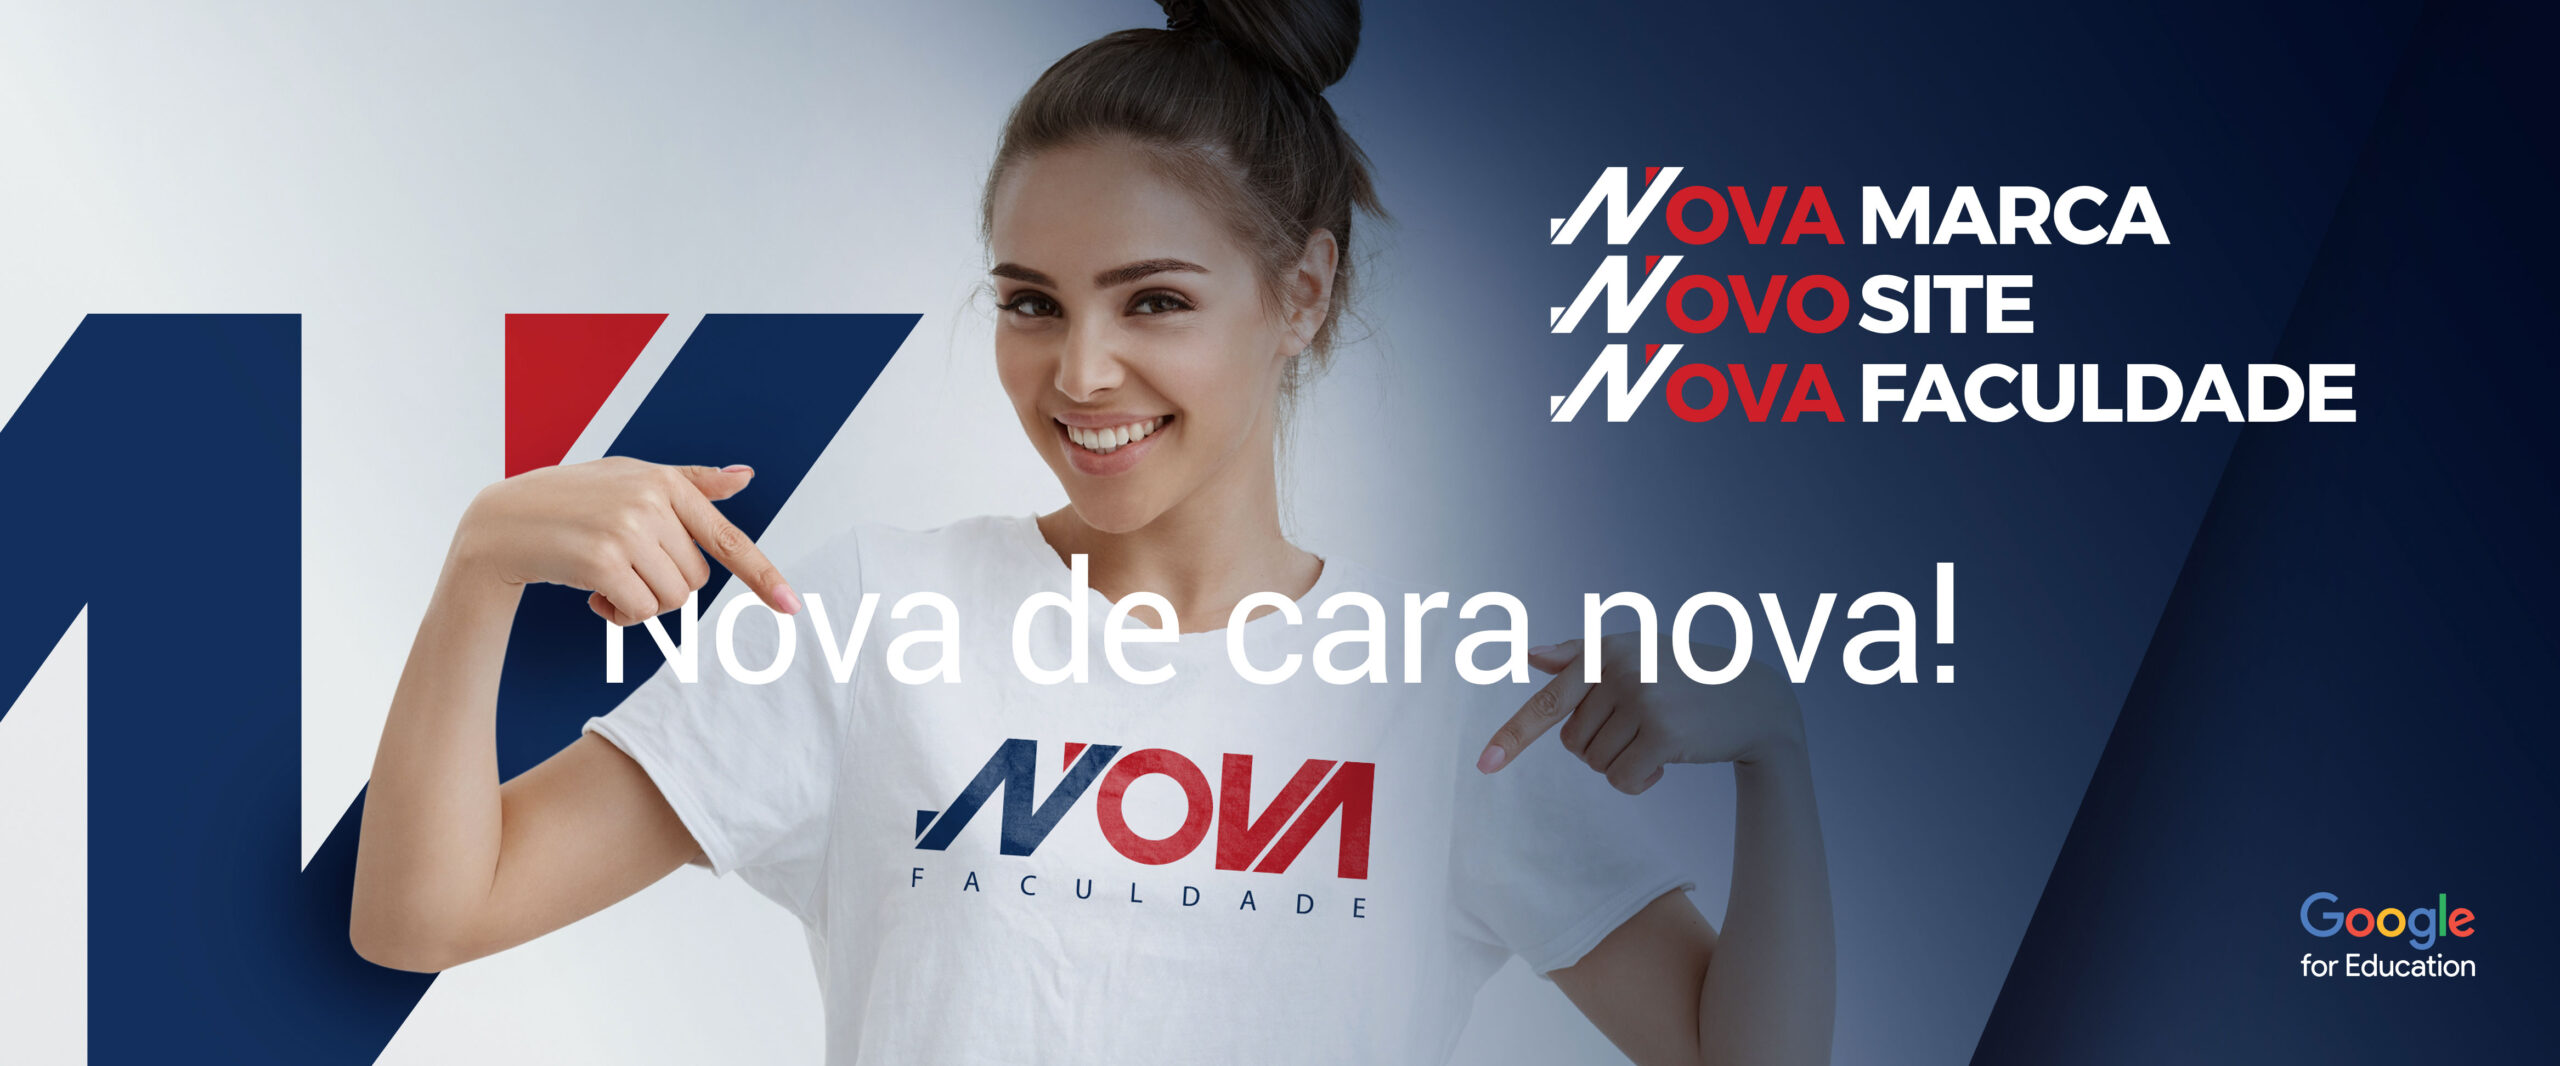 Banner_Nova-Faculdade_Nova-Cara-copiar